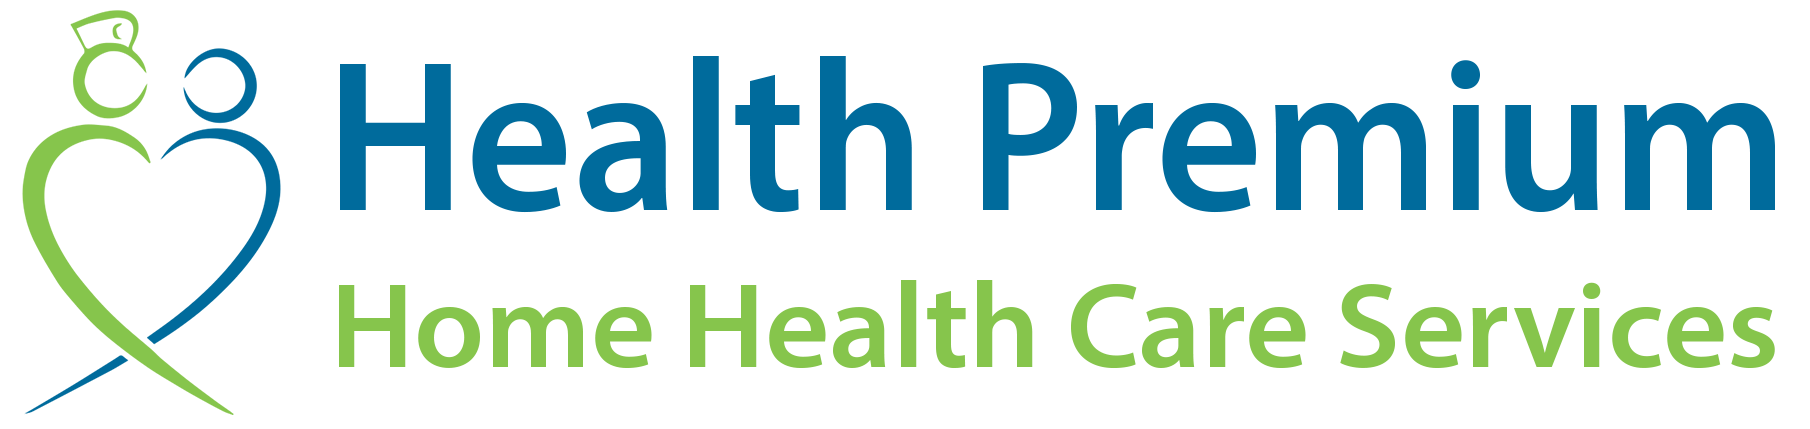 Health Premium Home Healthcare